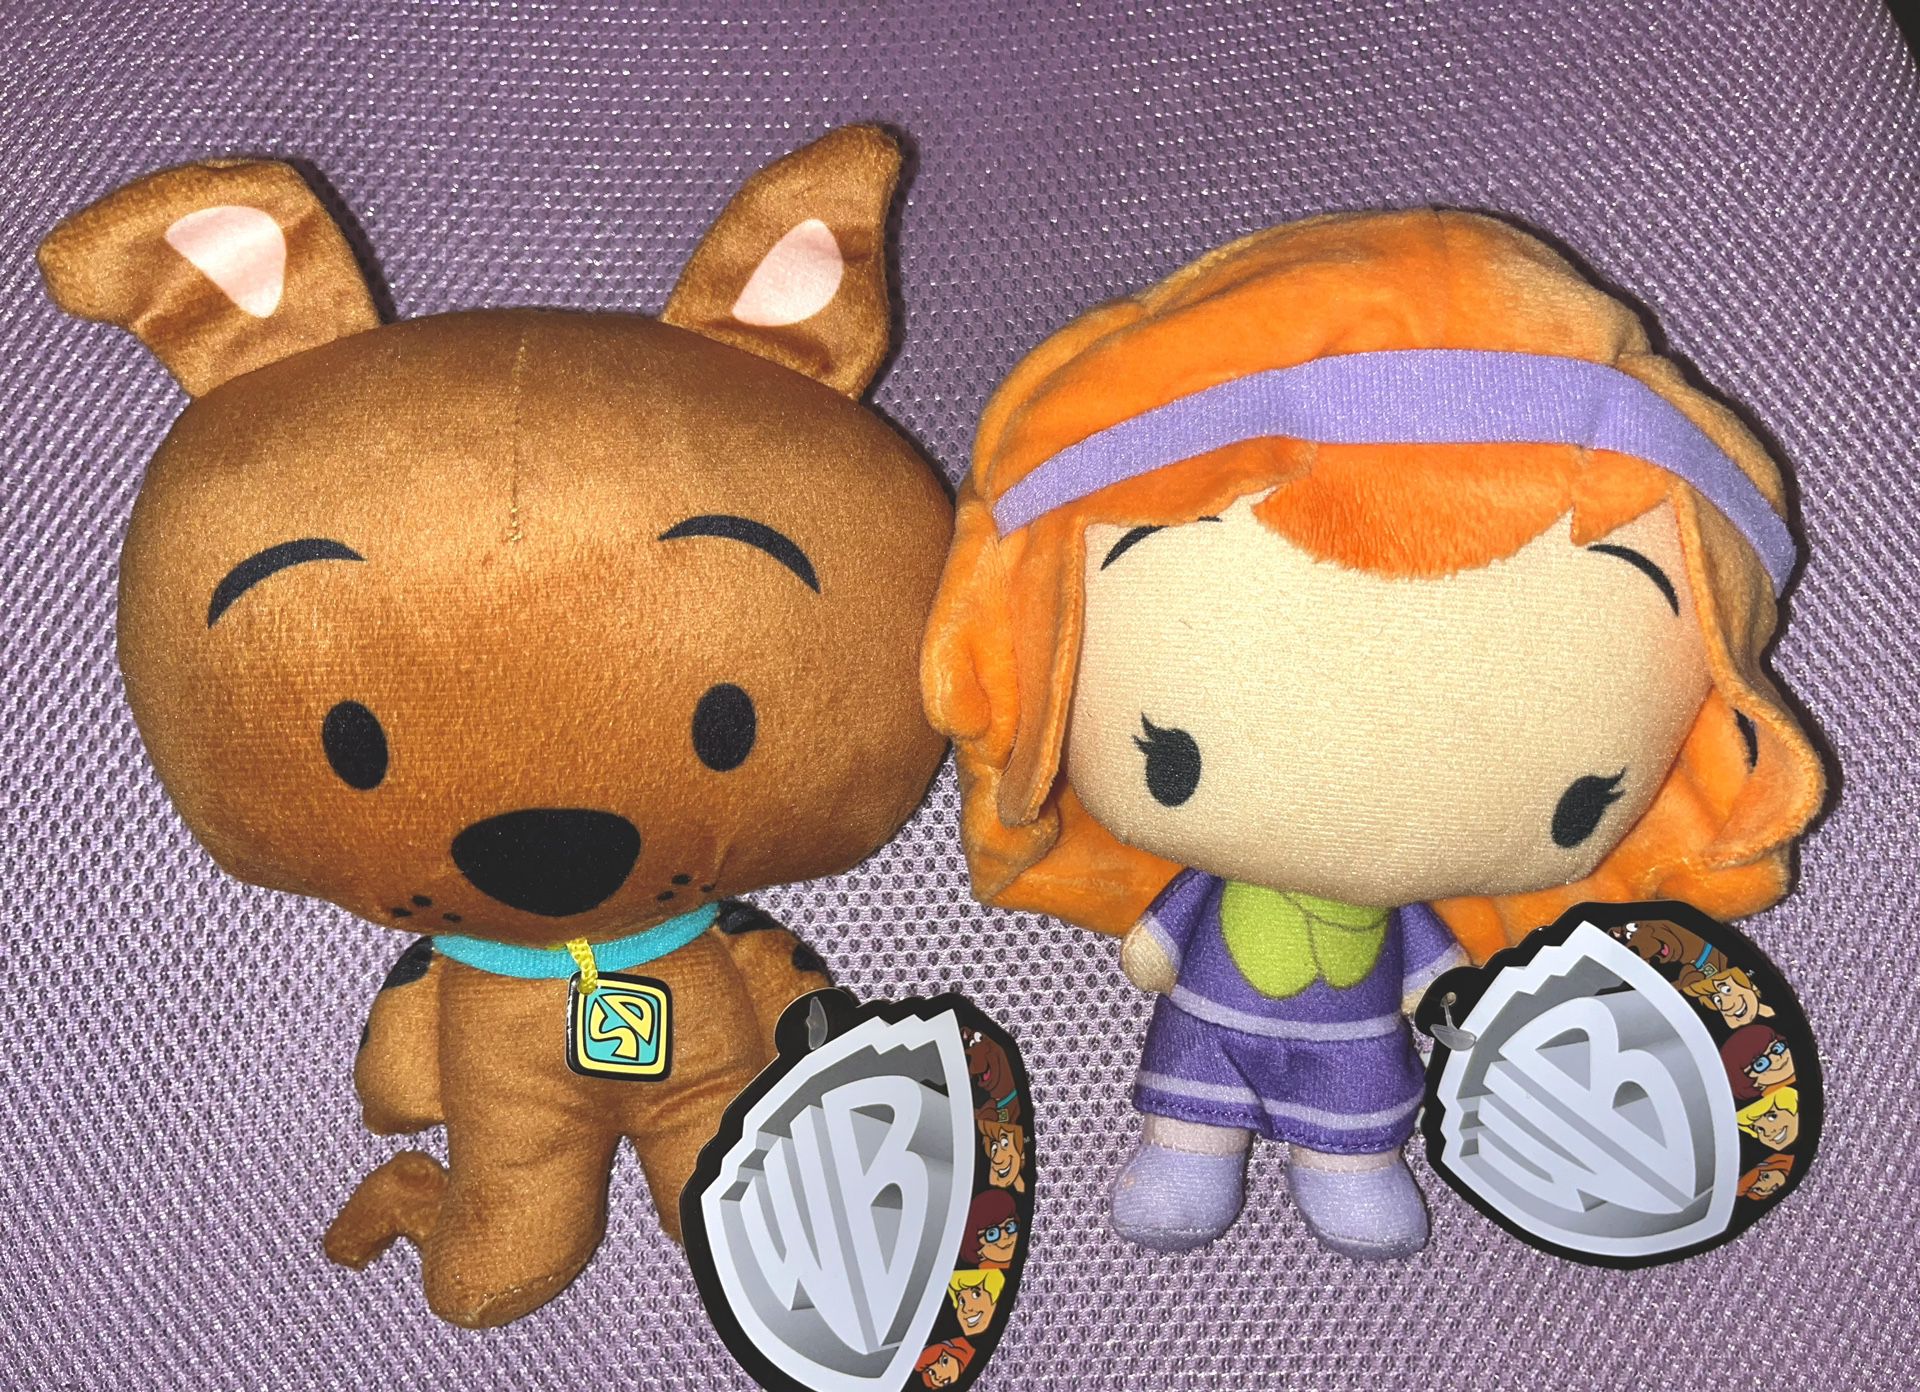 Scooby Doo & Daphne Plush